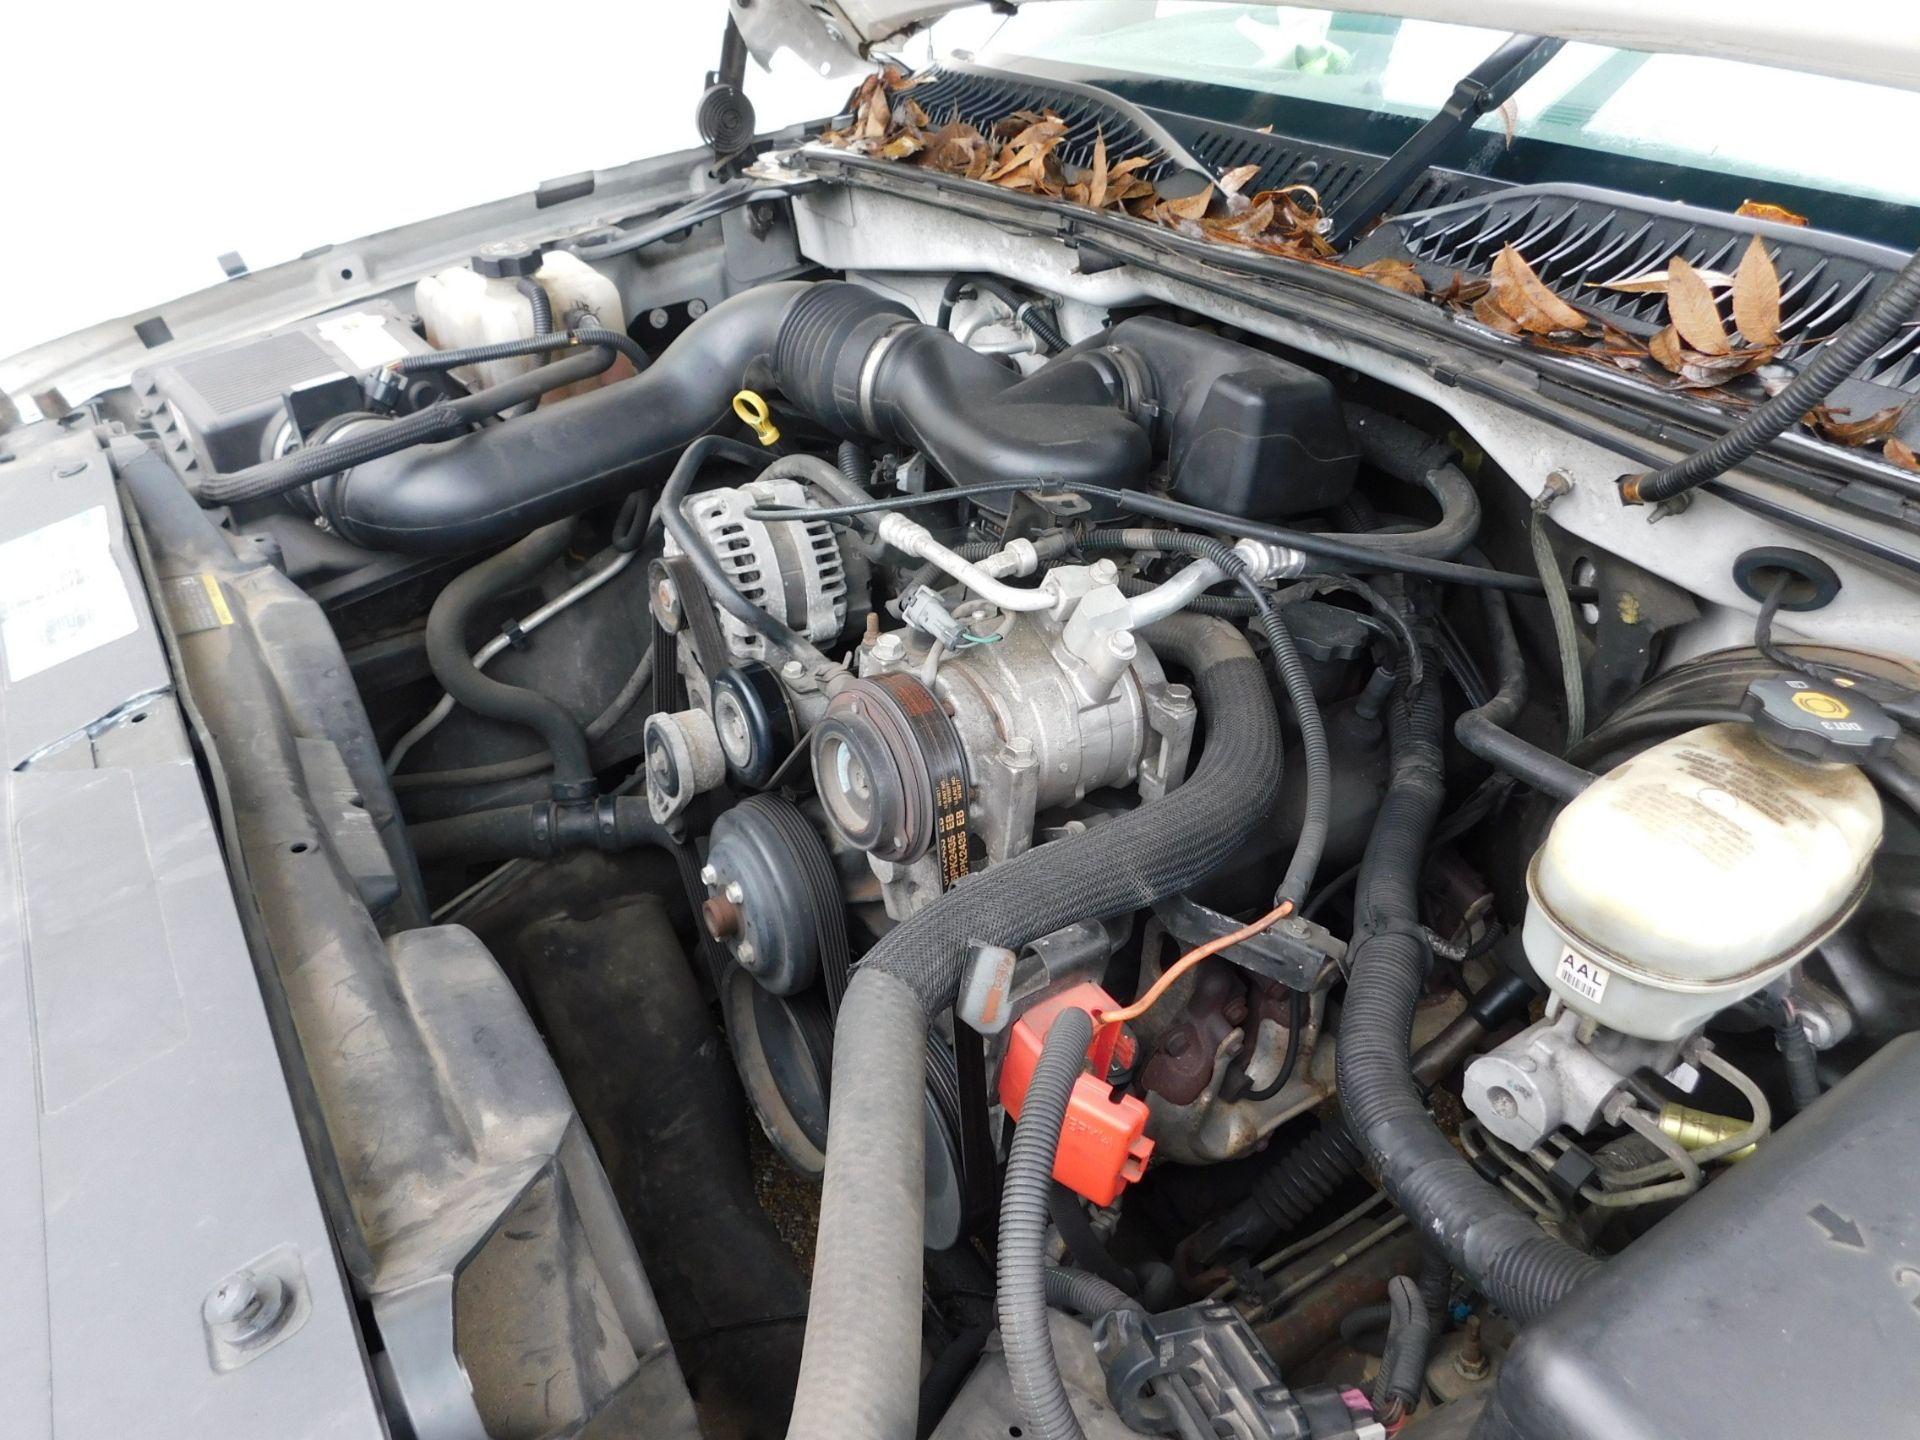 2006 Chevy 1500 Pickup, V-6 Gas, 5 Speed, Odometer 159,299, VIN 3GCEC14X46G237704 - Image 4 of 4